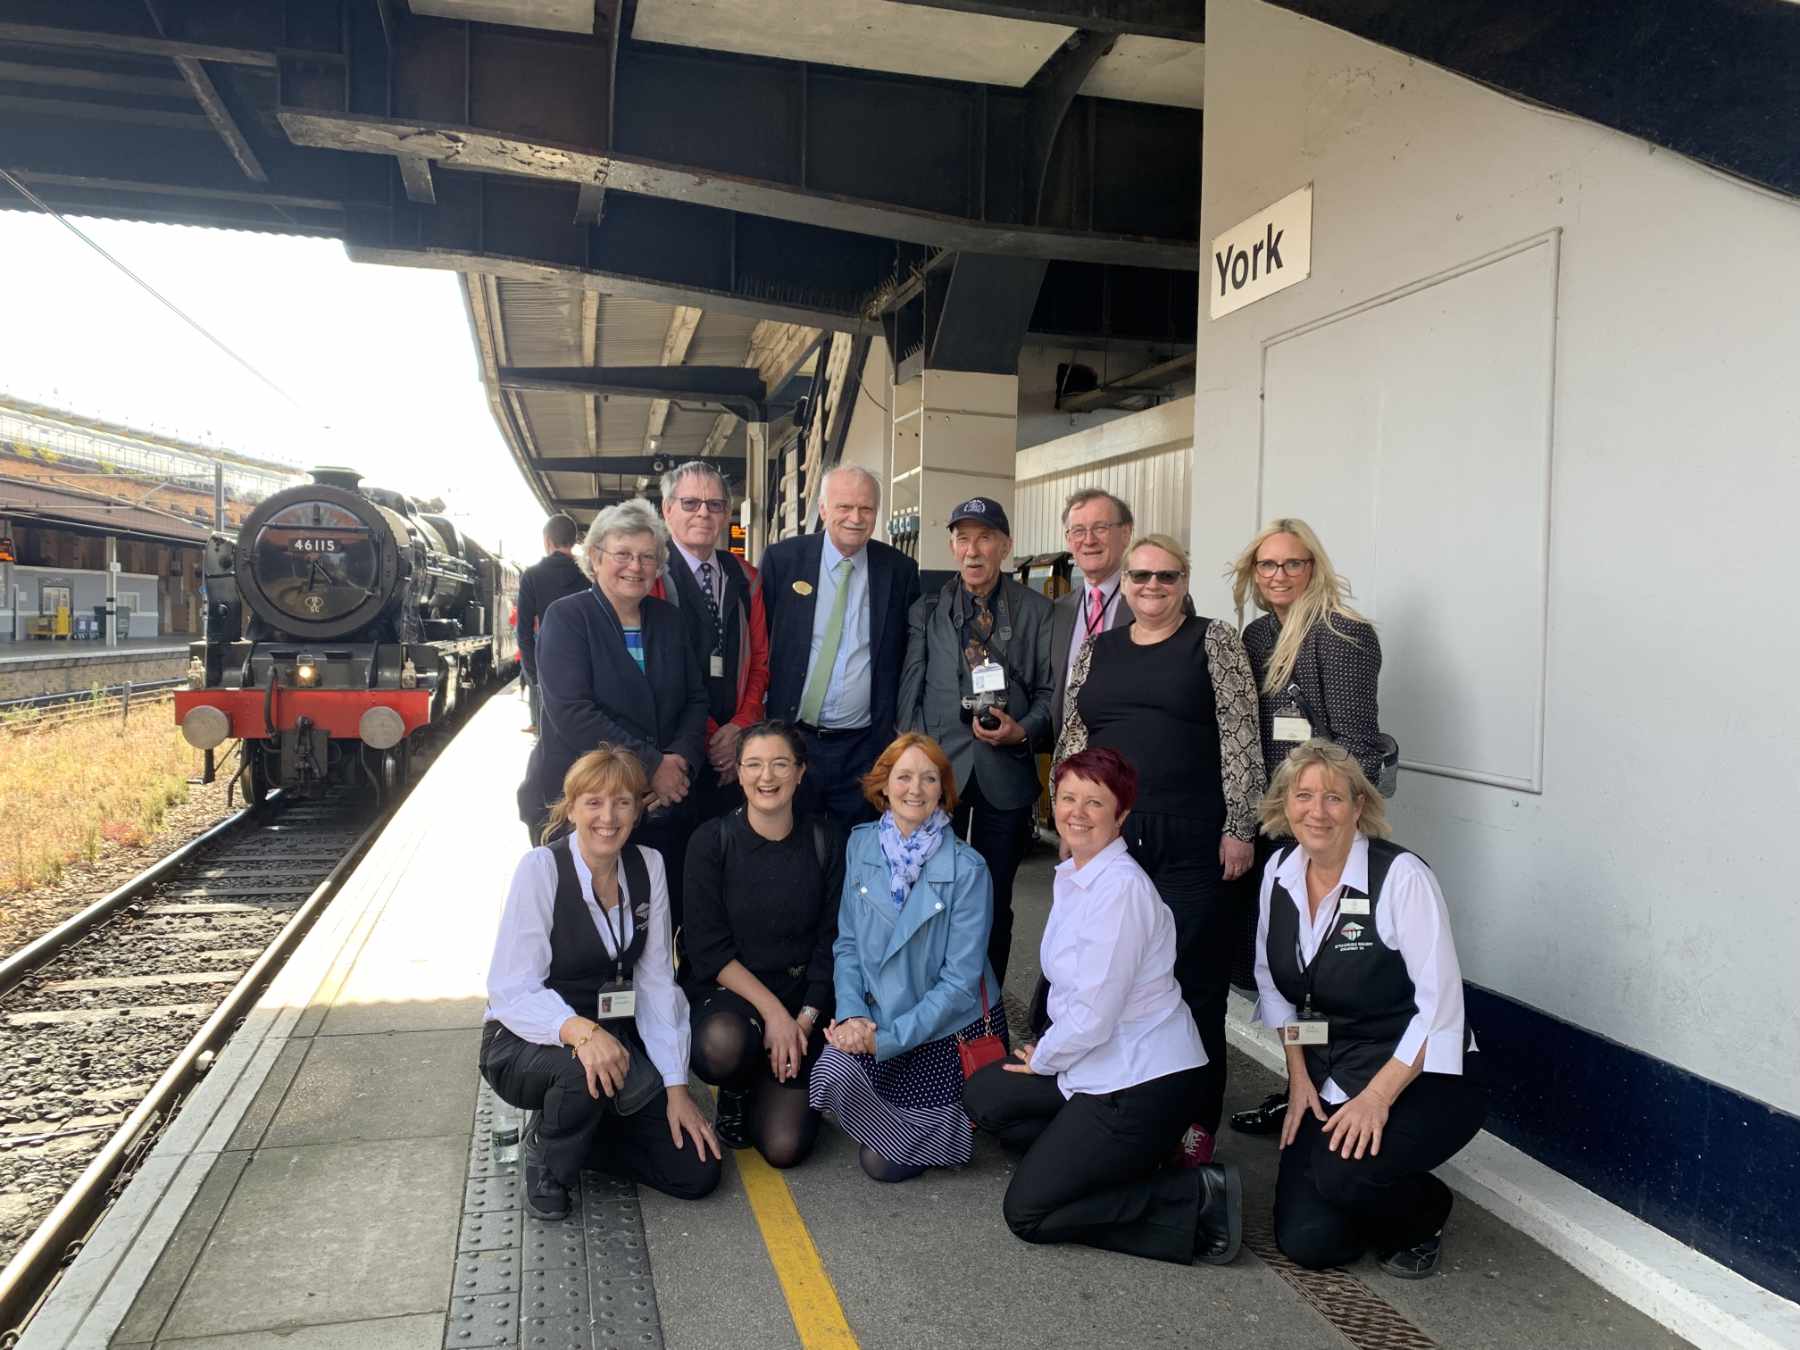 The Settle Carlisle Railway Development Company team alighting at York station.